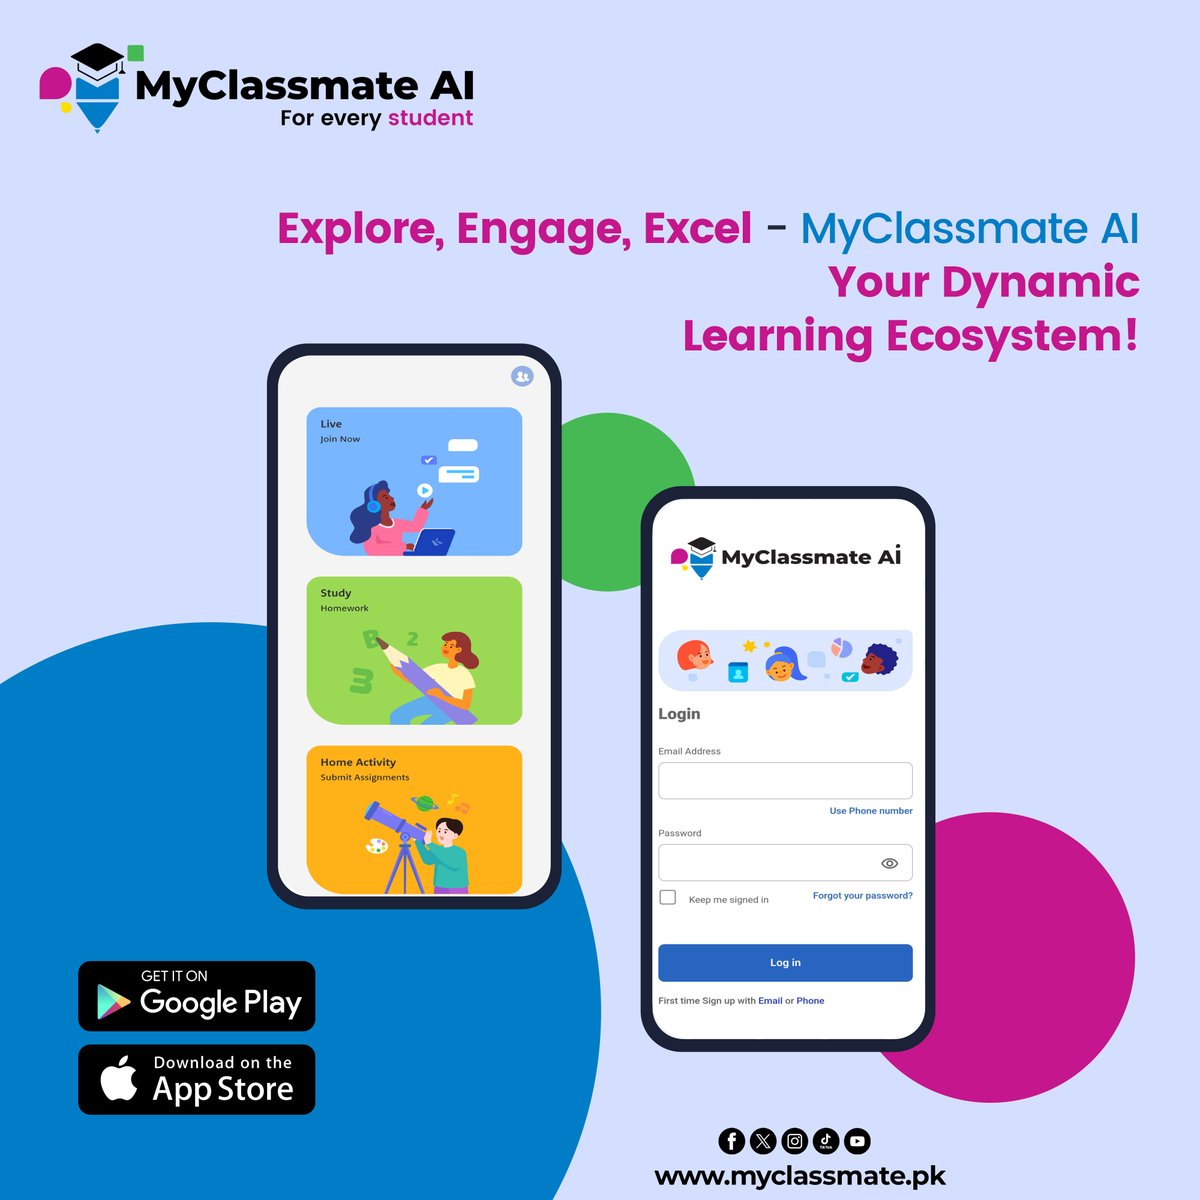 MyClassmate AI - Explore, Engage, Excel! Your dynamic learning ecosystem for a smarter tomorrow.

.
.
.
.
#LearnSmart #EducationElevated #FutureOfLearning #InnovationInEducation #MyClassmateAI #InnovationInEducation #KnowledgeUnleashed #MyClassmateLMS #DigitalSchool